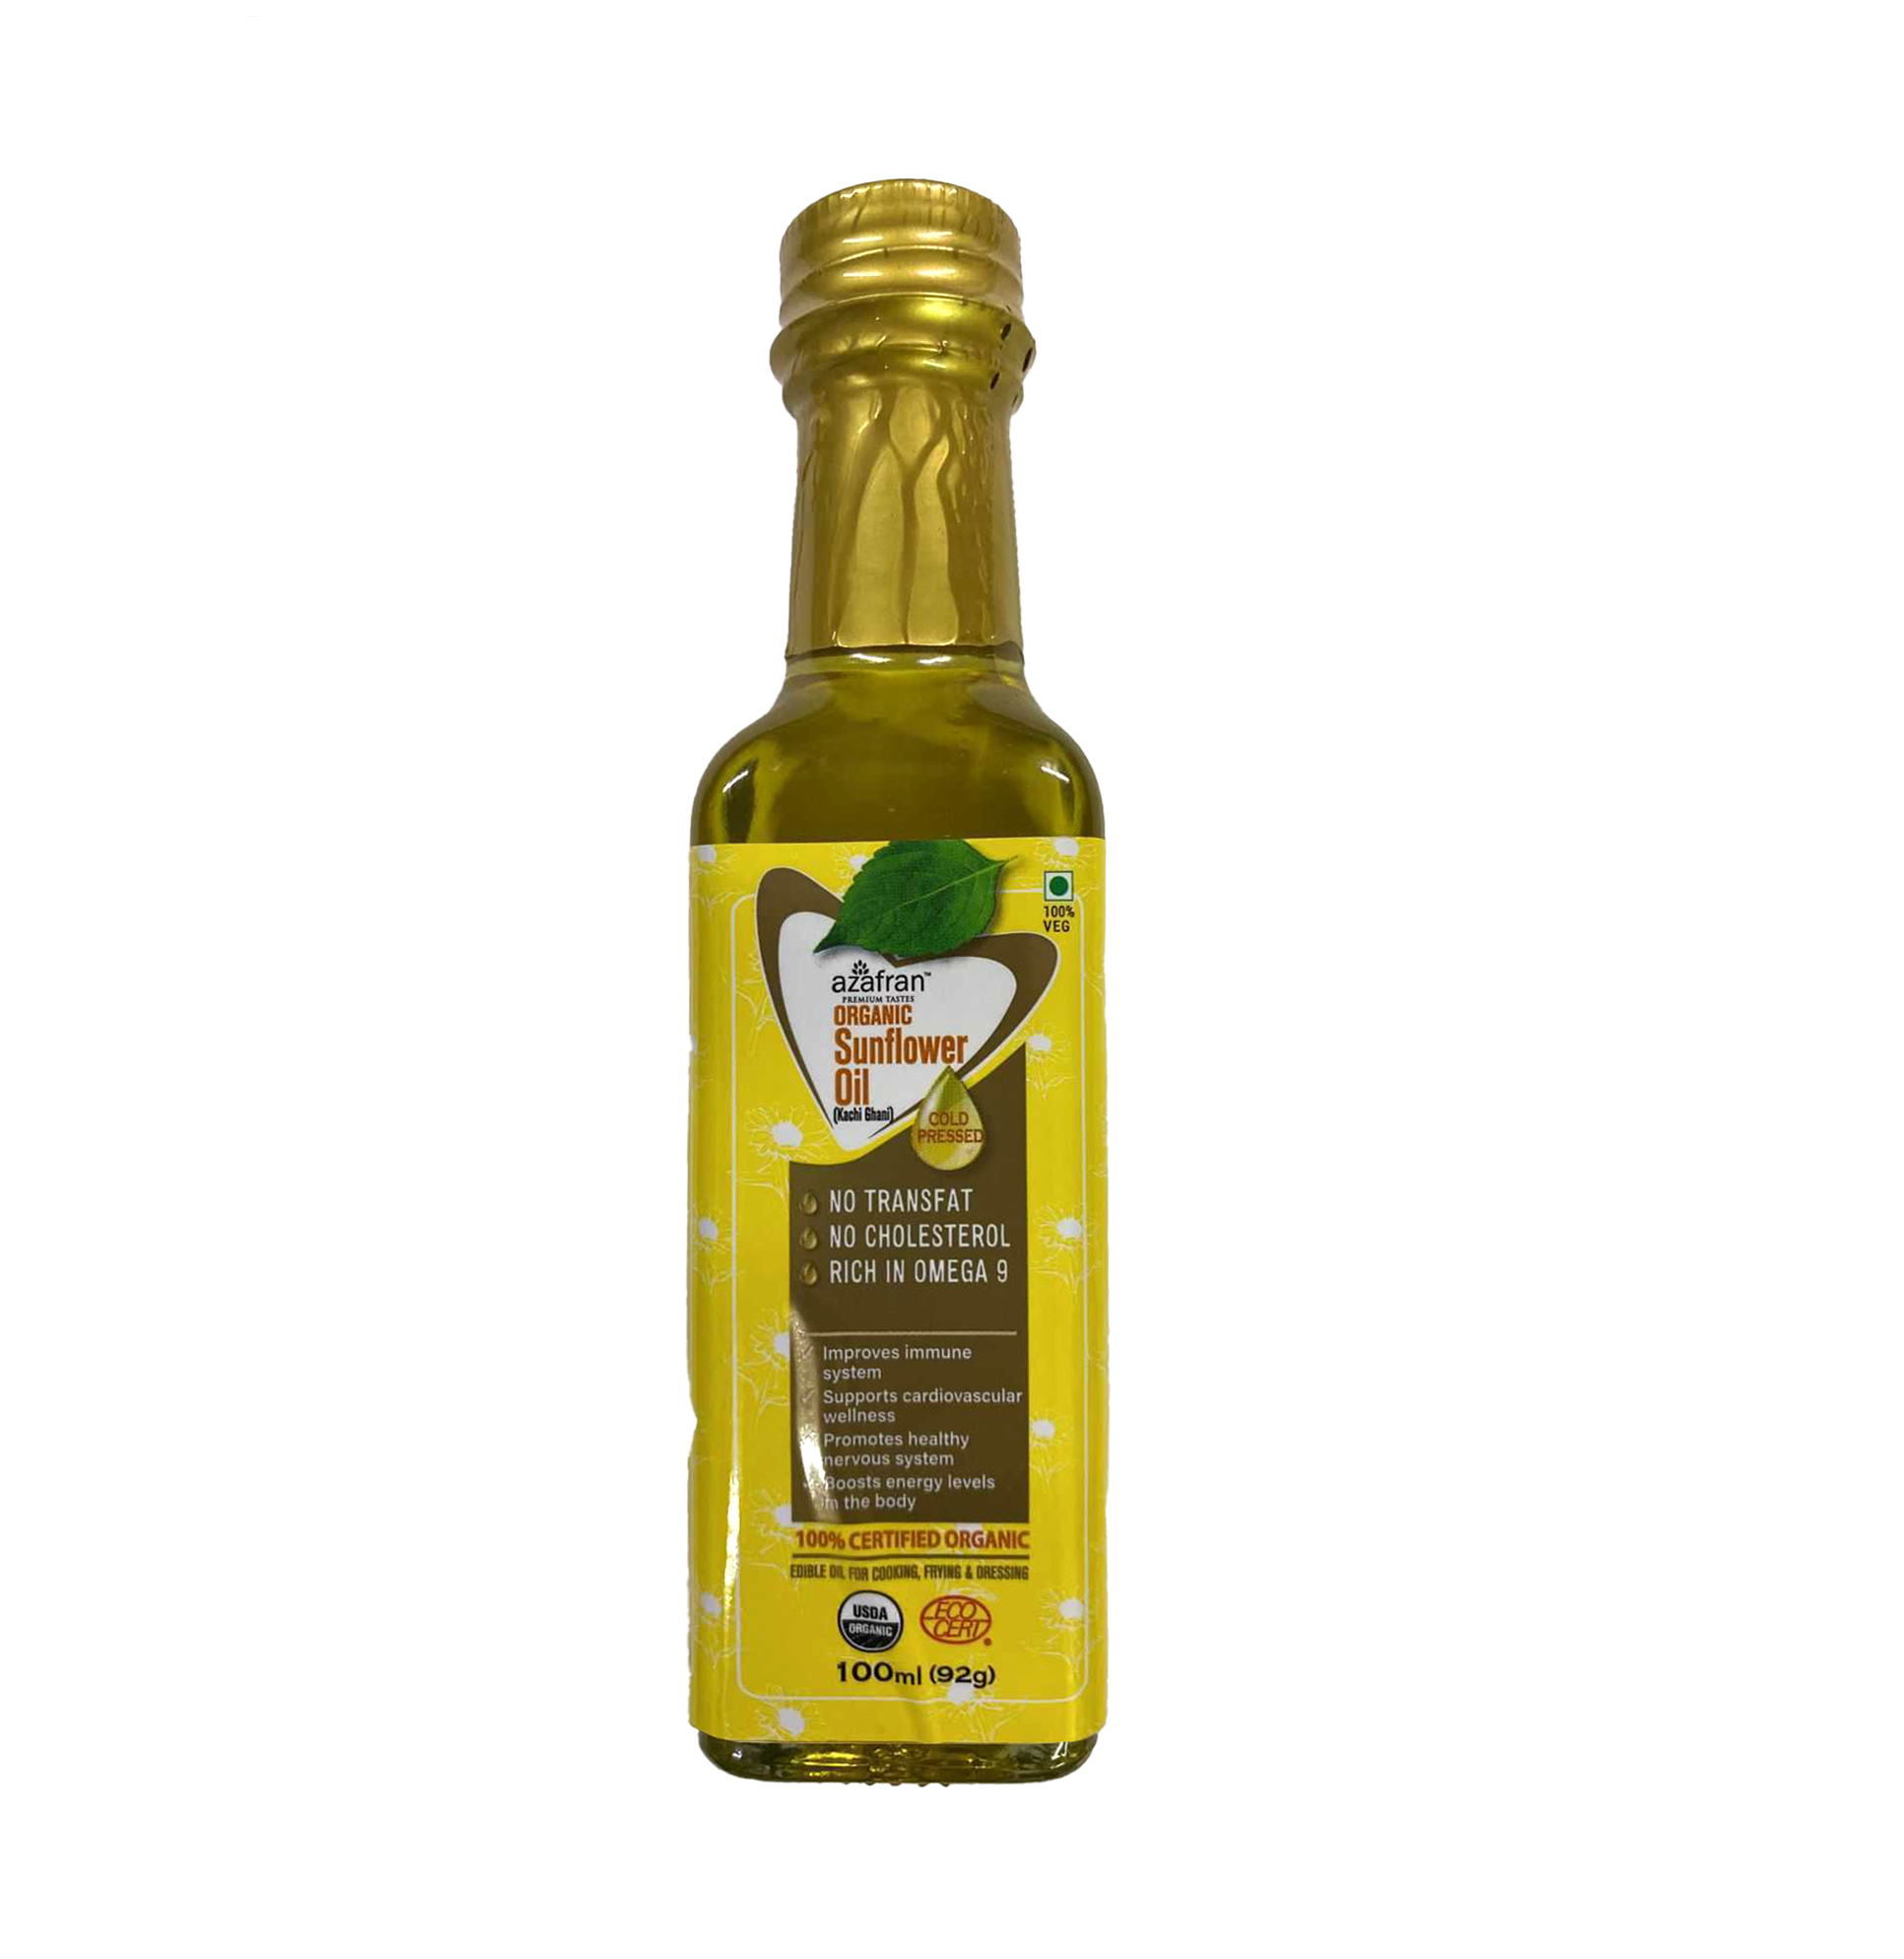 Azafran Organic Cold Pressed Sunflower Oil 